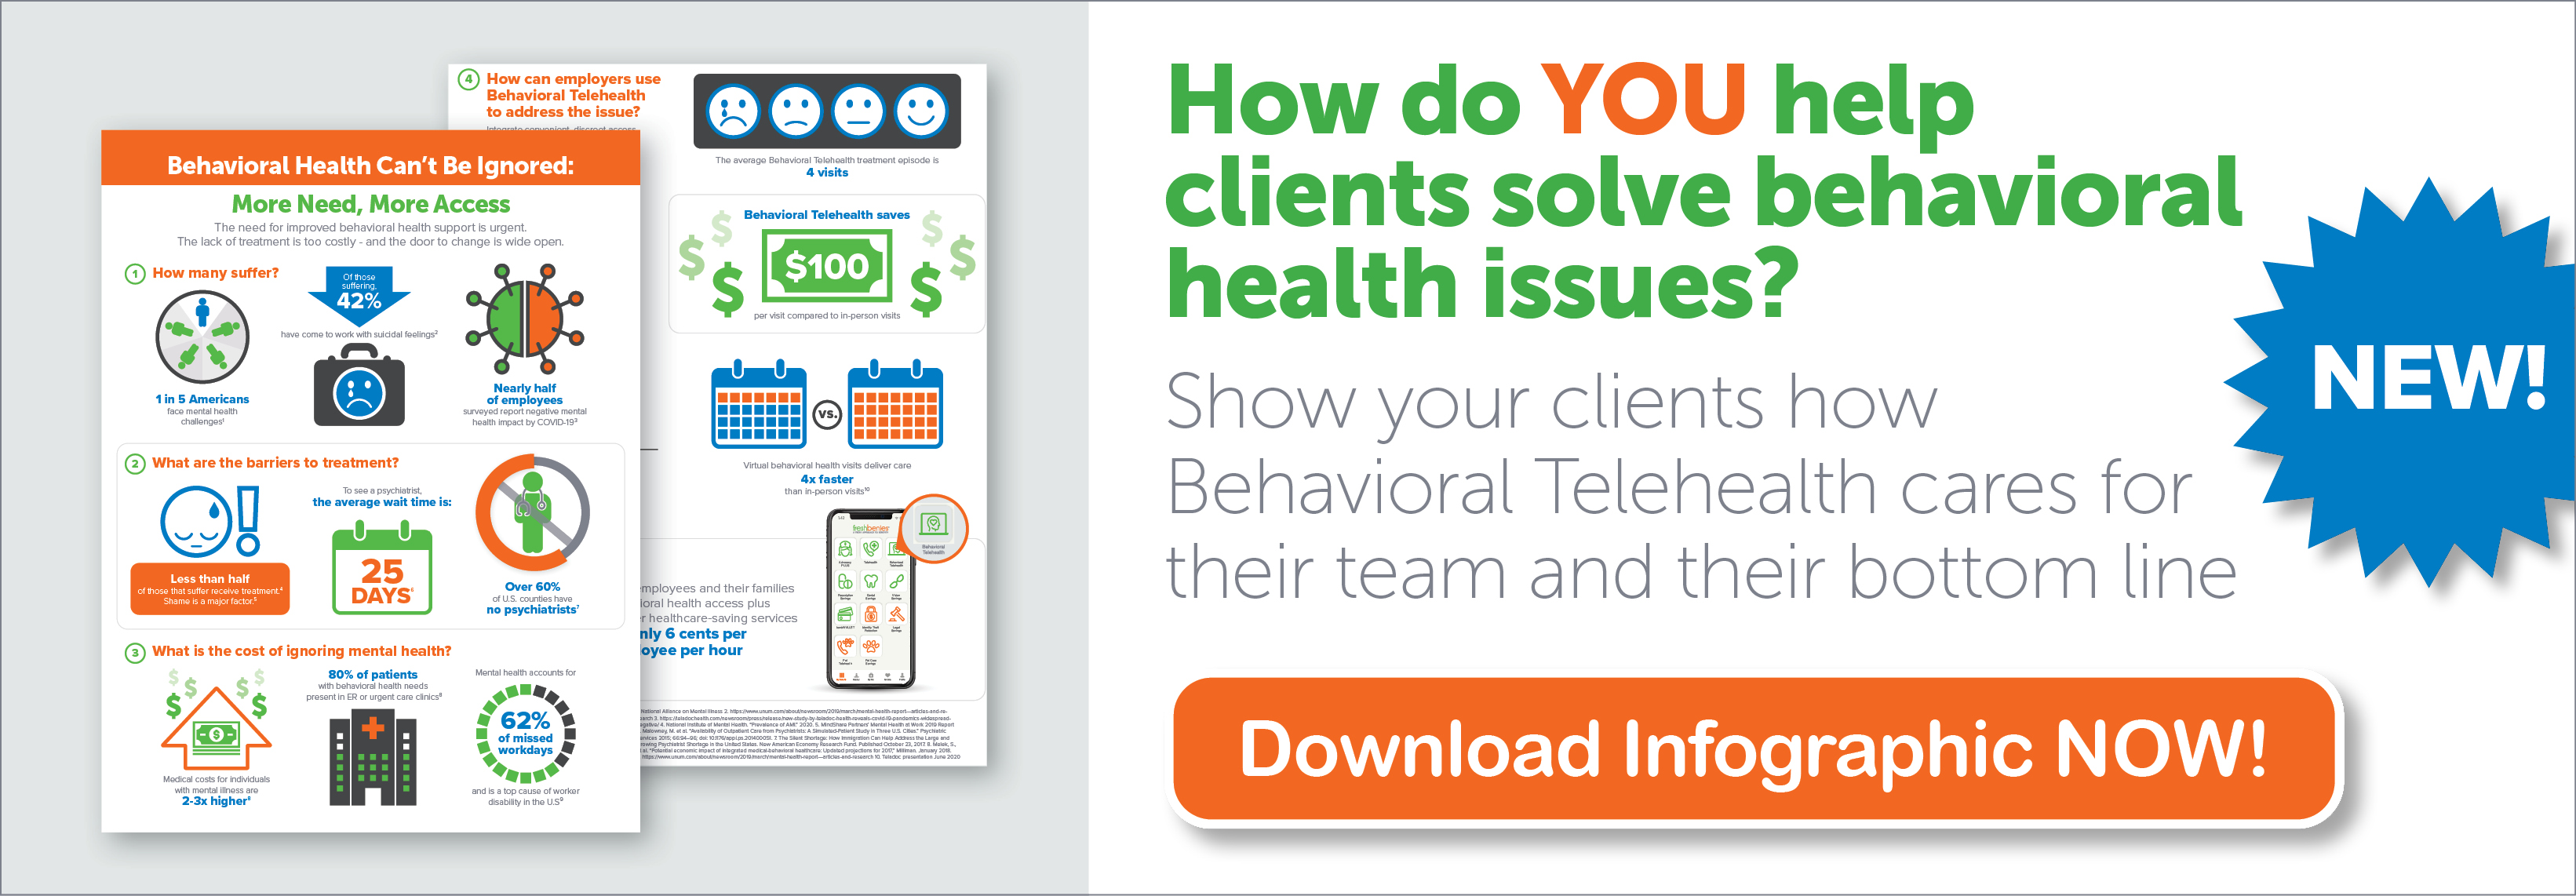 How do you help clients meet behavioral health needs?